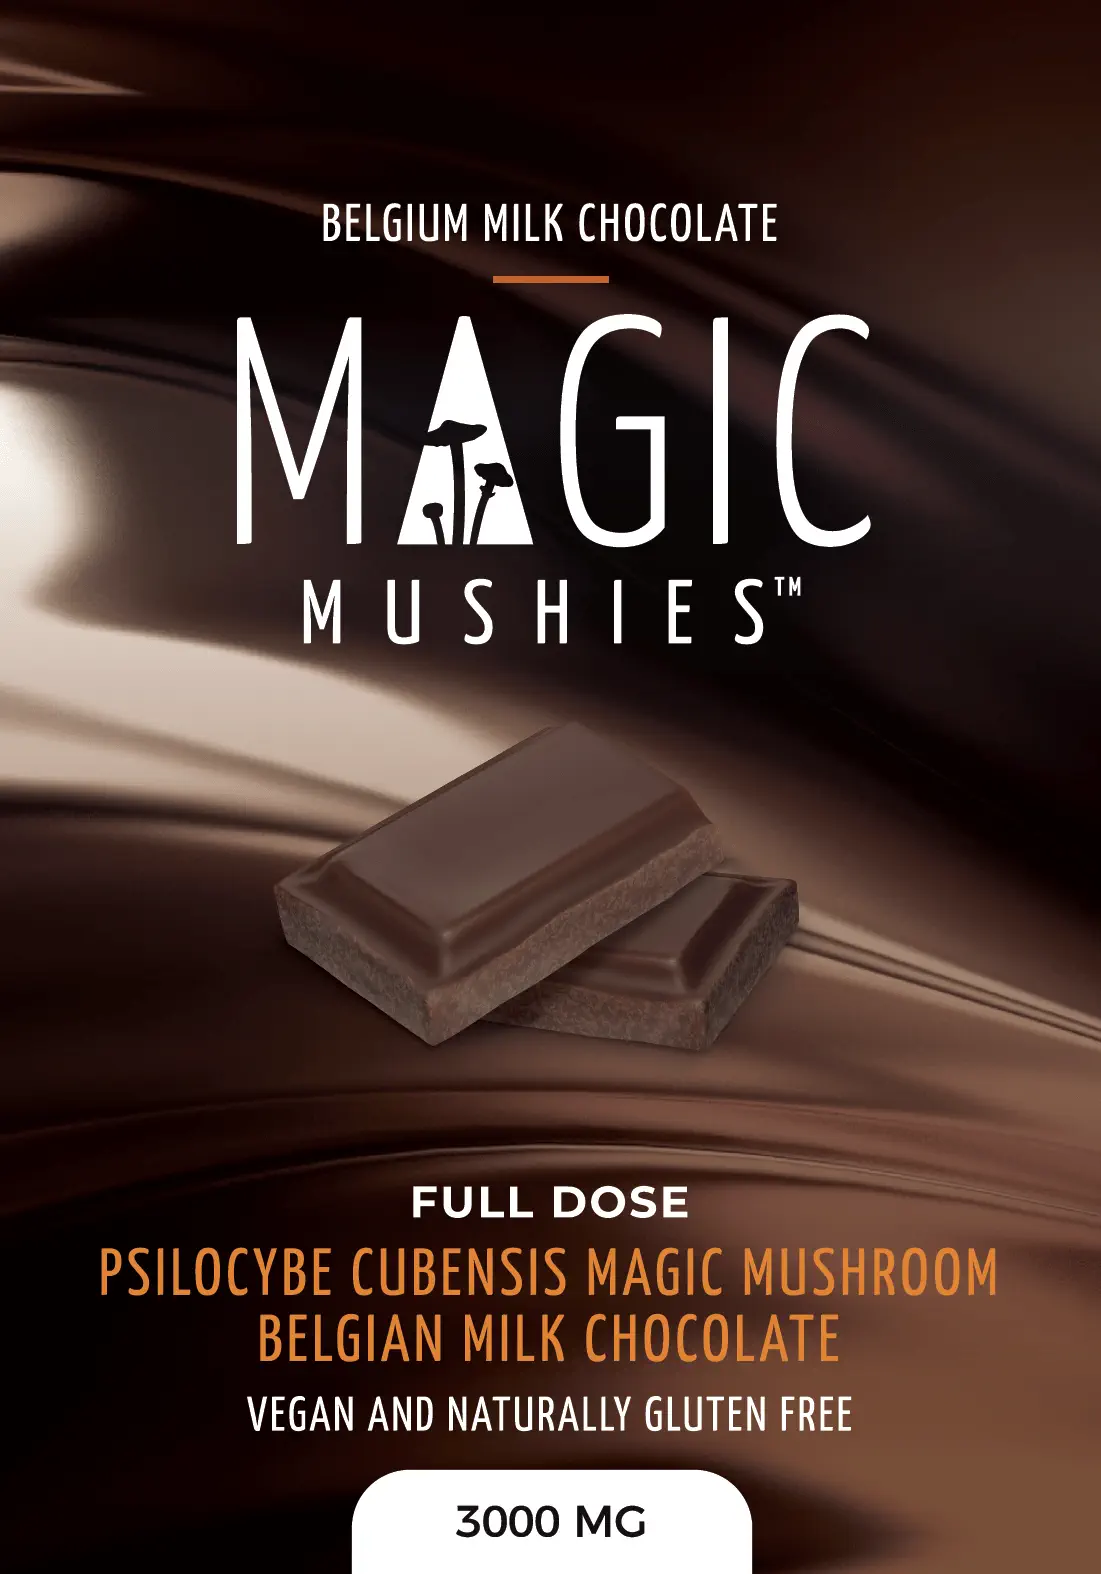 Belgian Milk Chocolate Magic Mushies